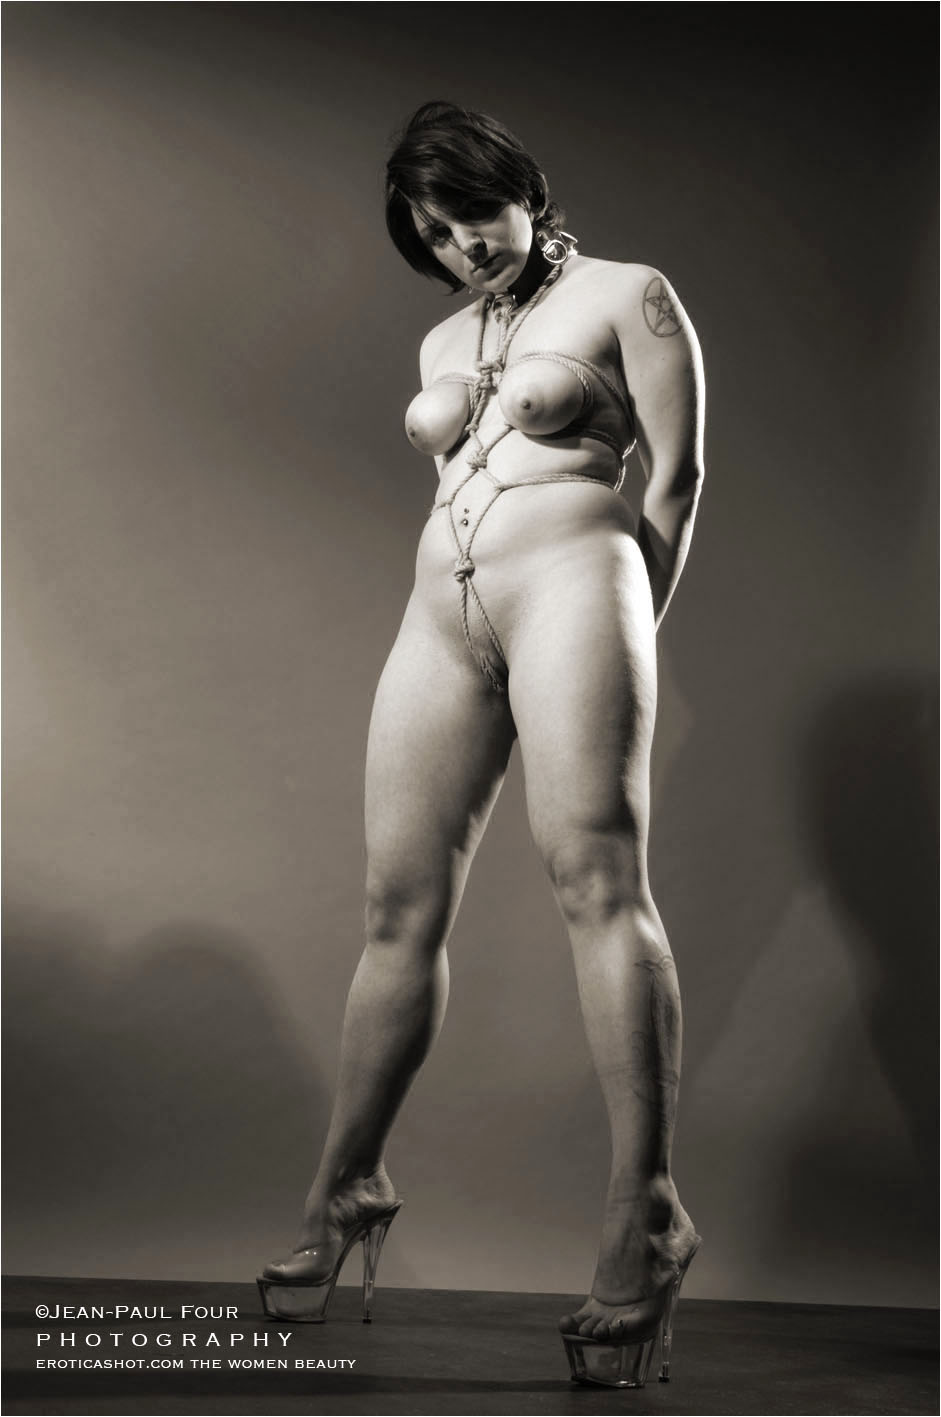 Marilyne, shibari girl, zenta, nude, tatoos, scarification, follow her on eroticashot.com, pict by Jean-Paul Four